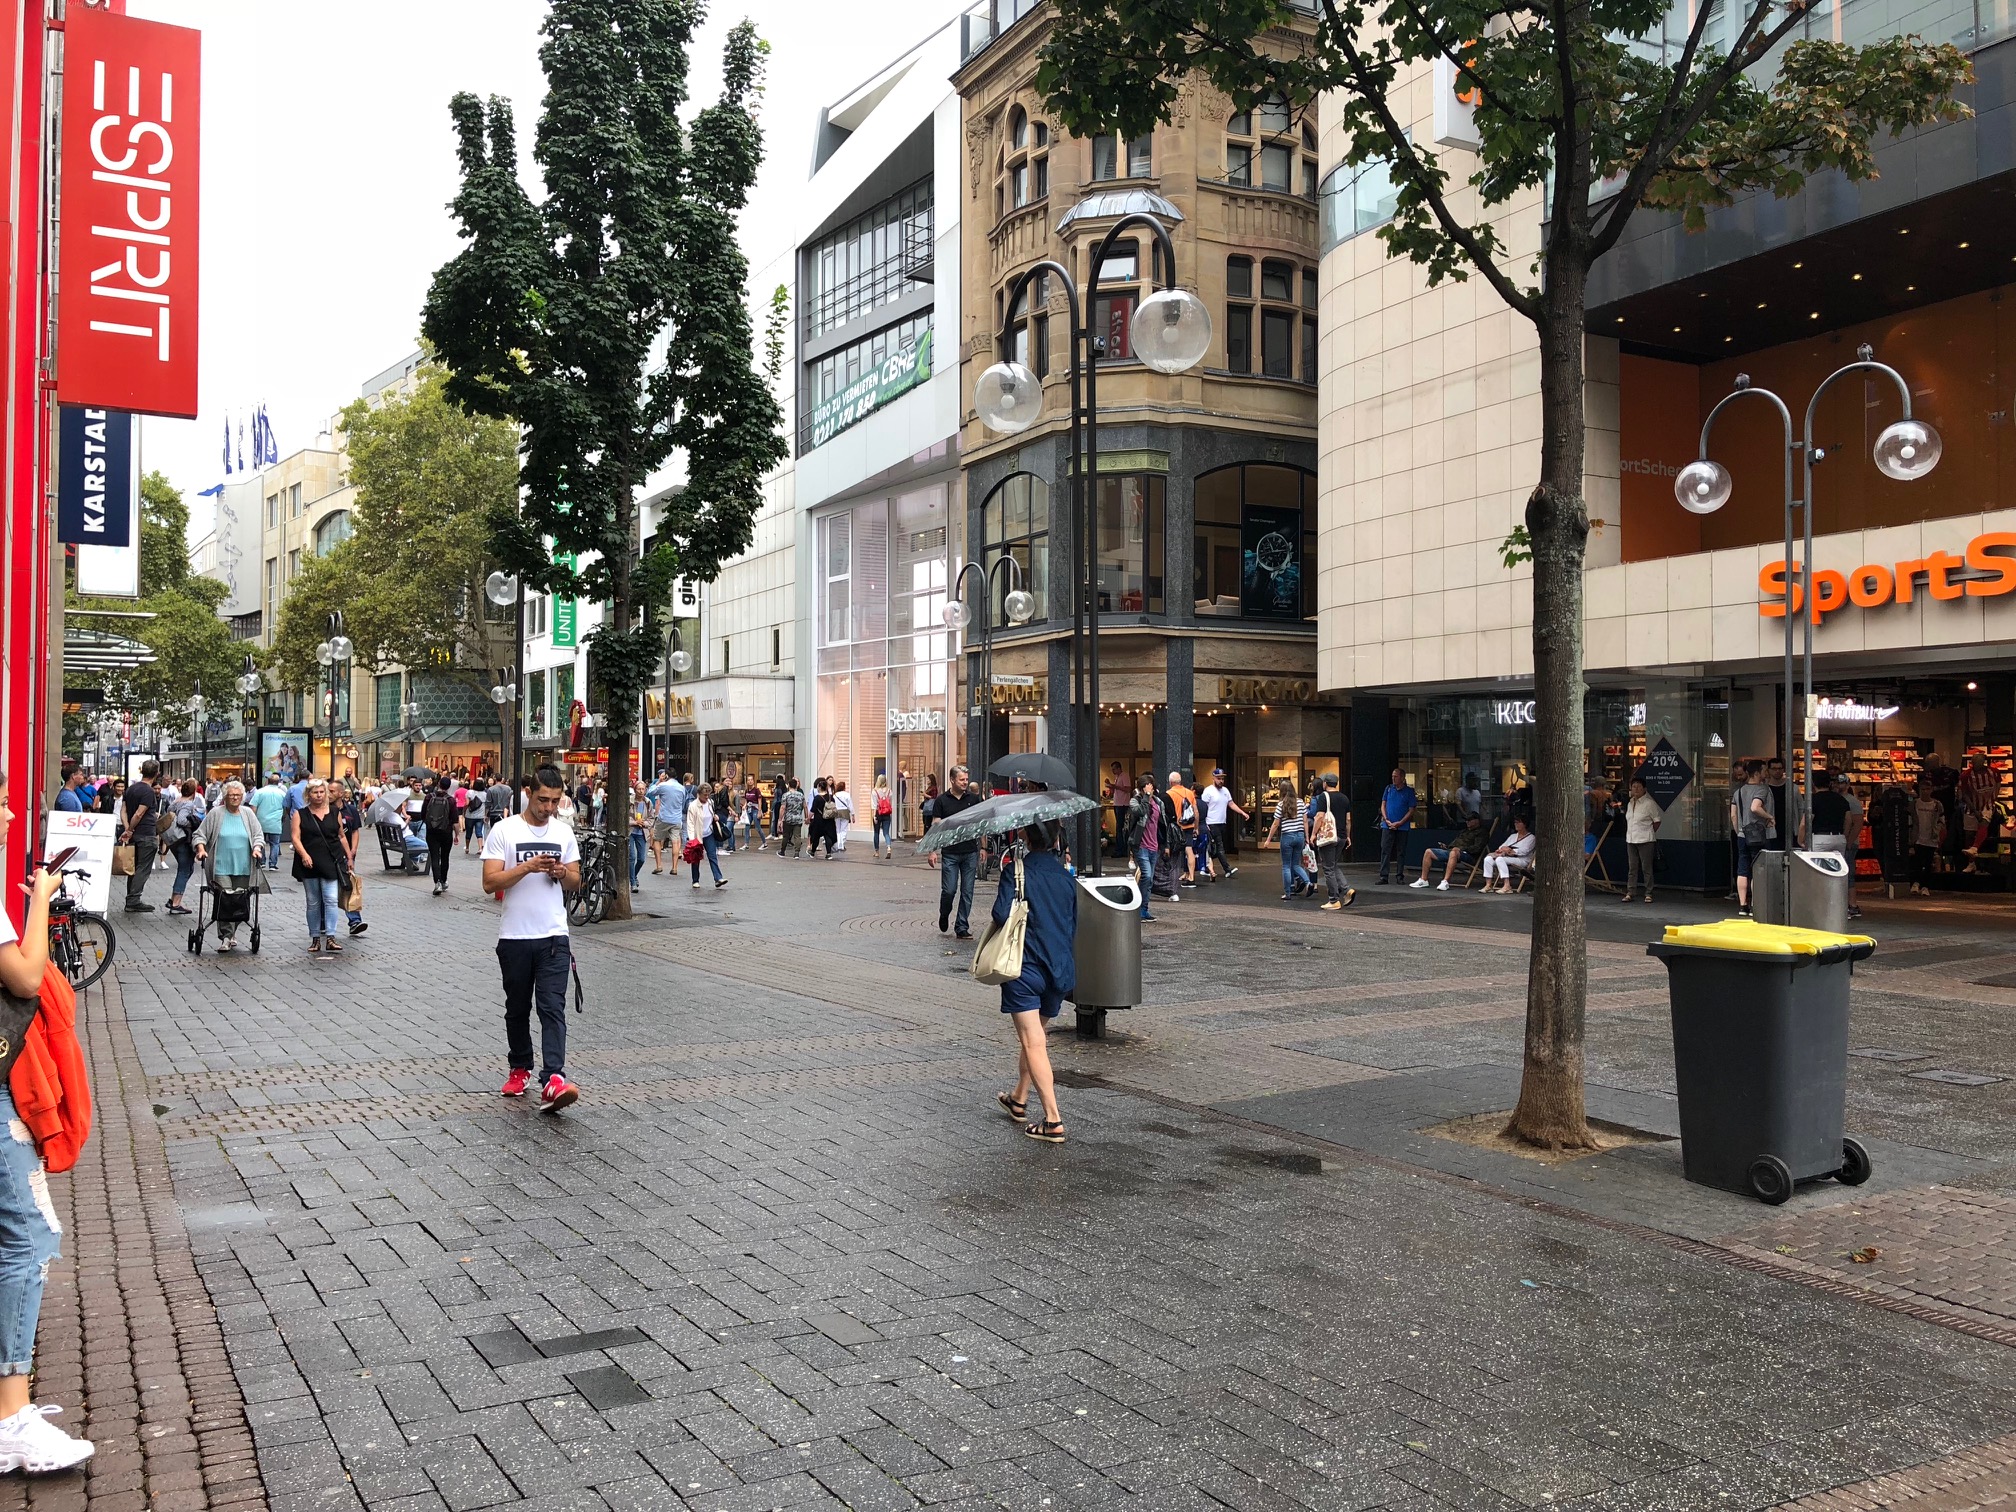 Pedestrian friendly shopping area #2